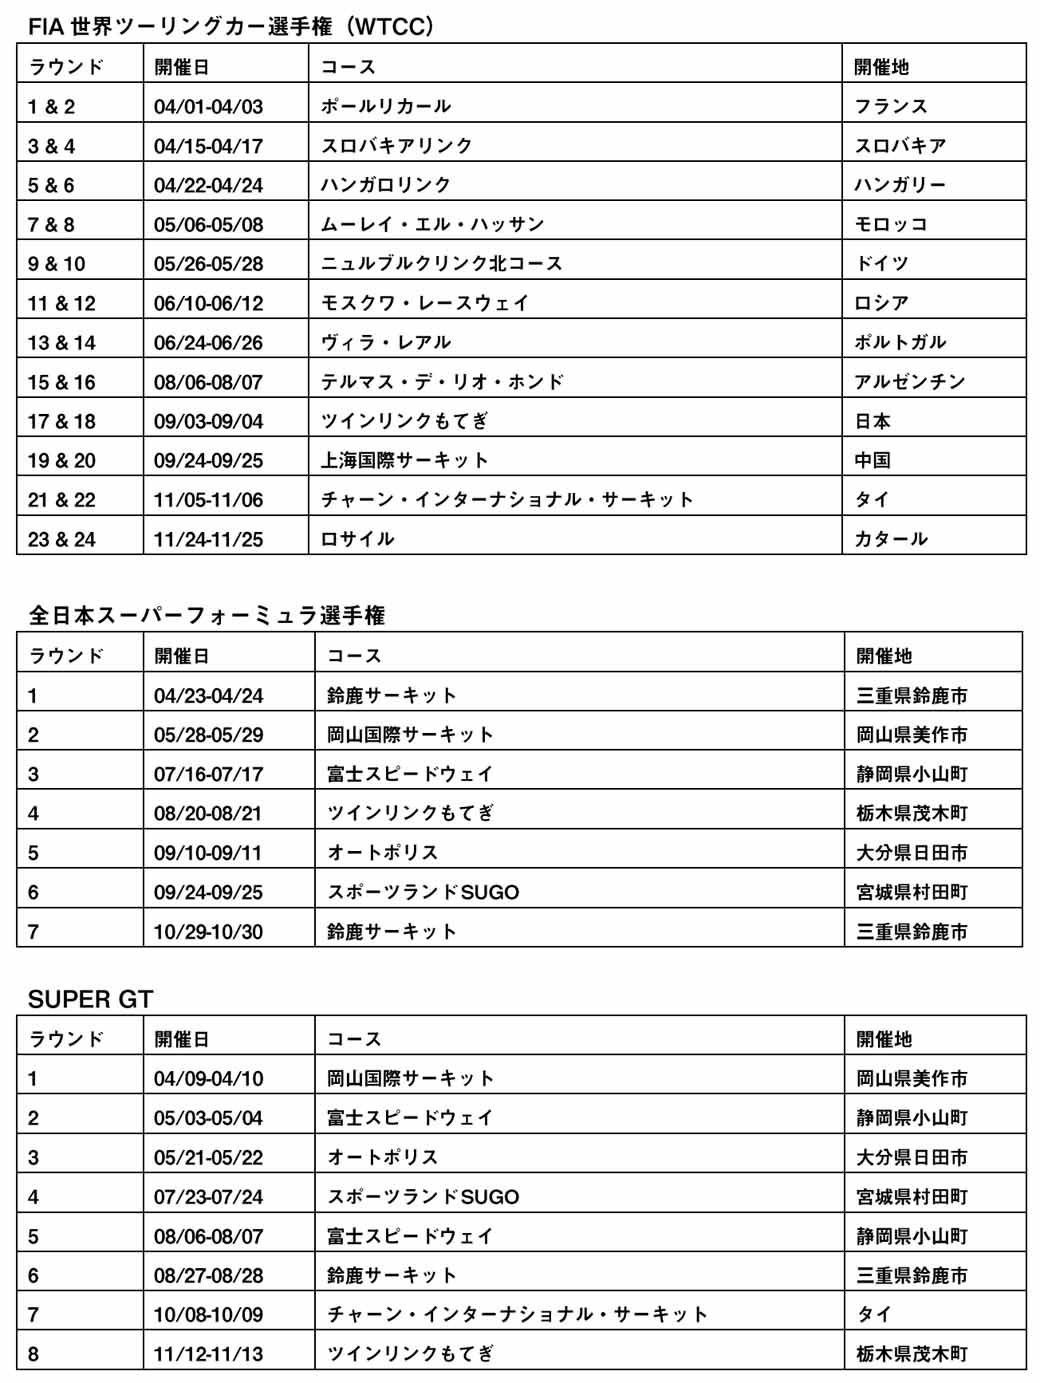 yokohama-rubber-announced-the-motor-sport-activity-plan-of-201620160330-1